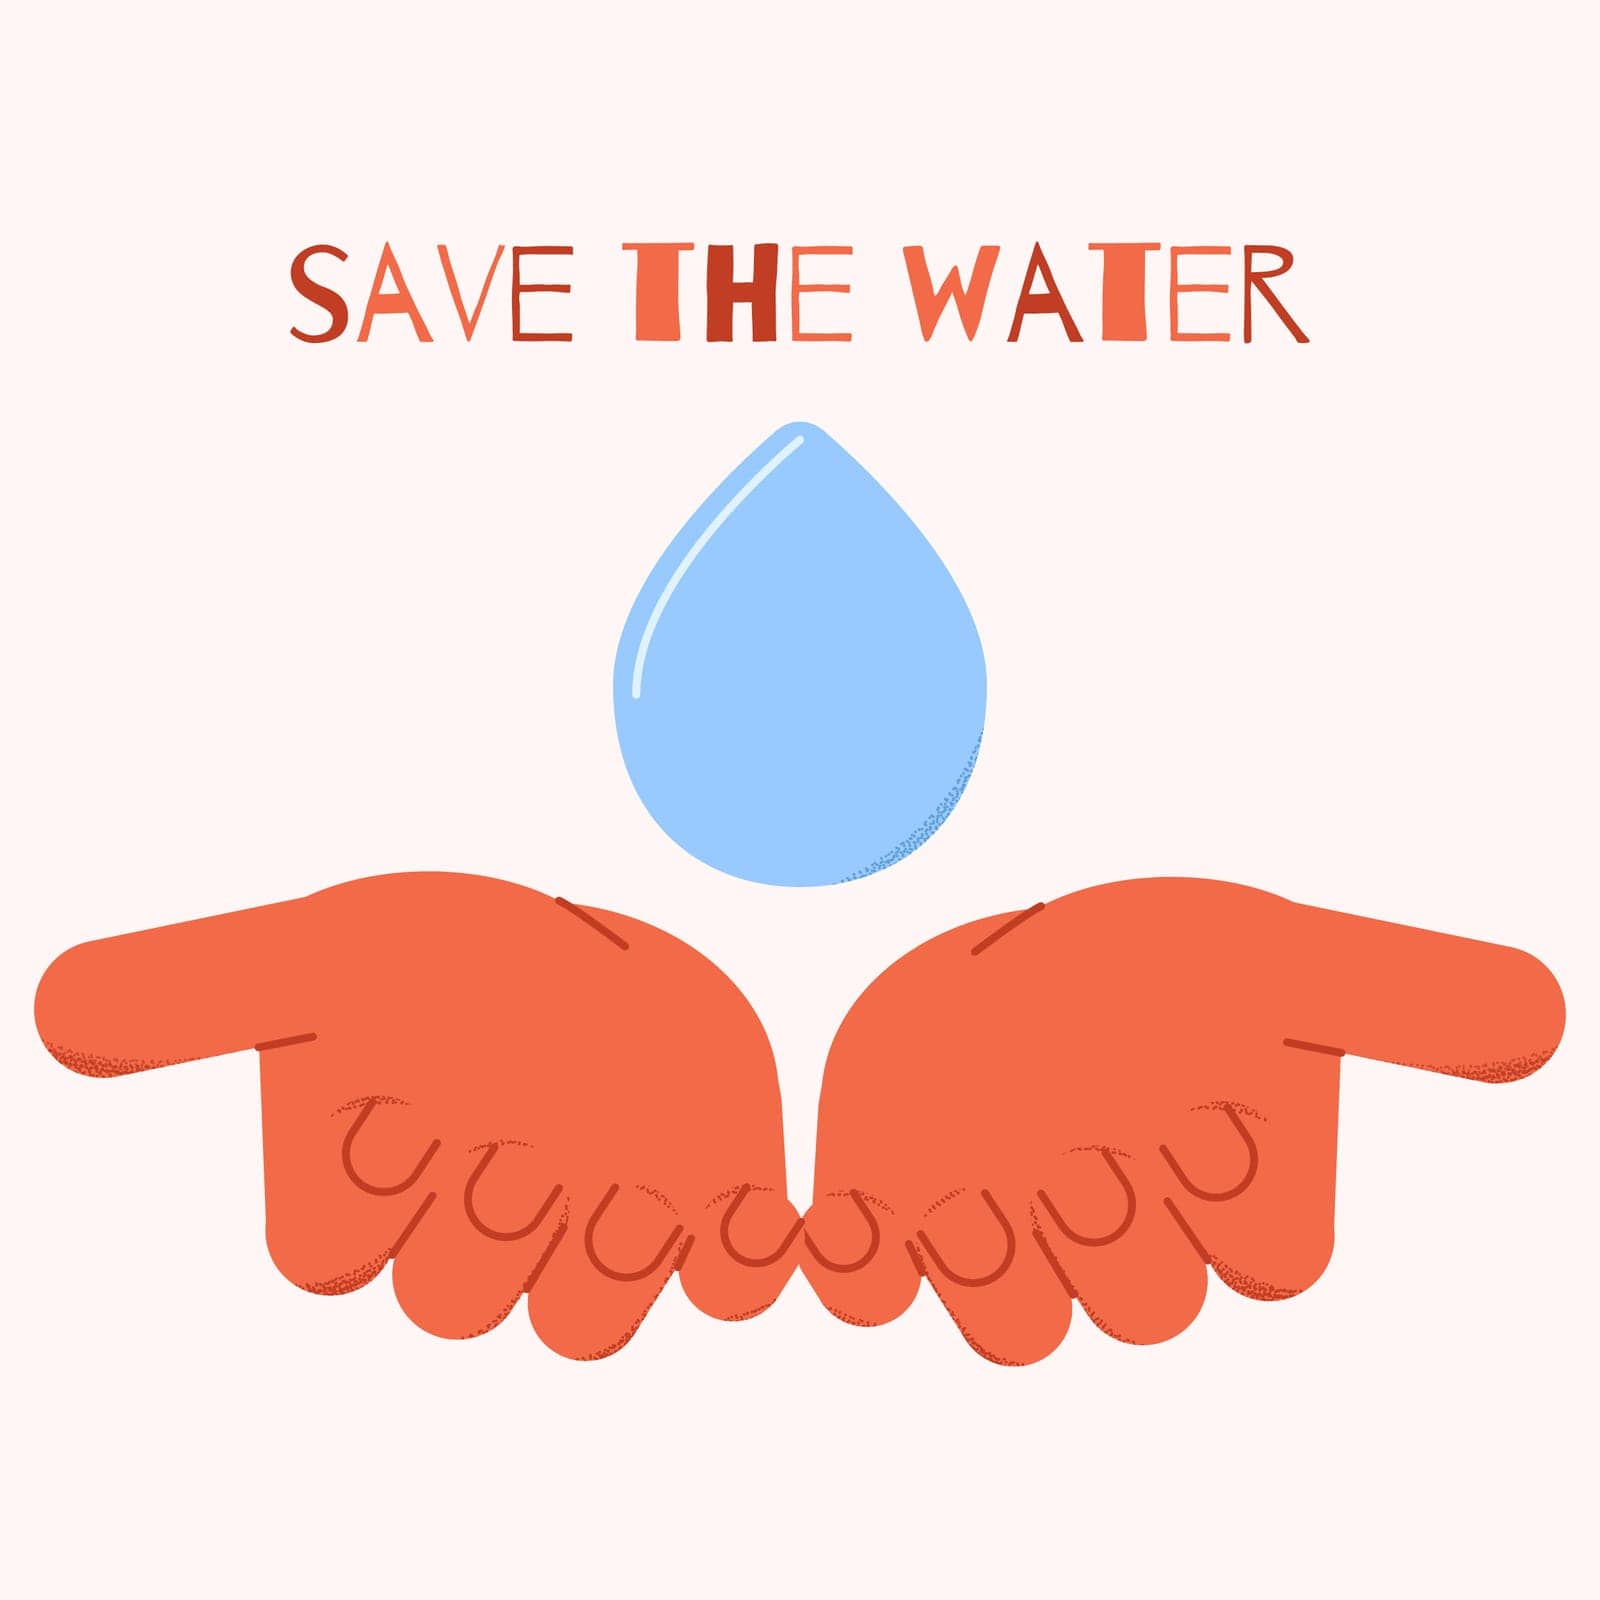 Save the water. Bio, ecology print by malyhanka